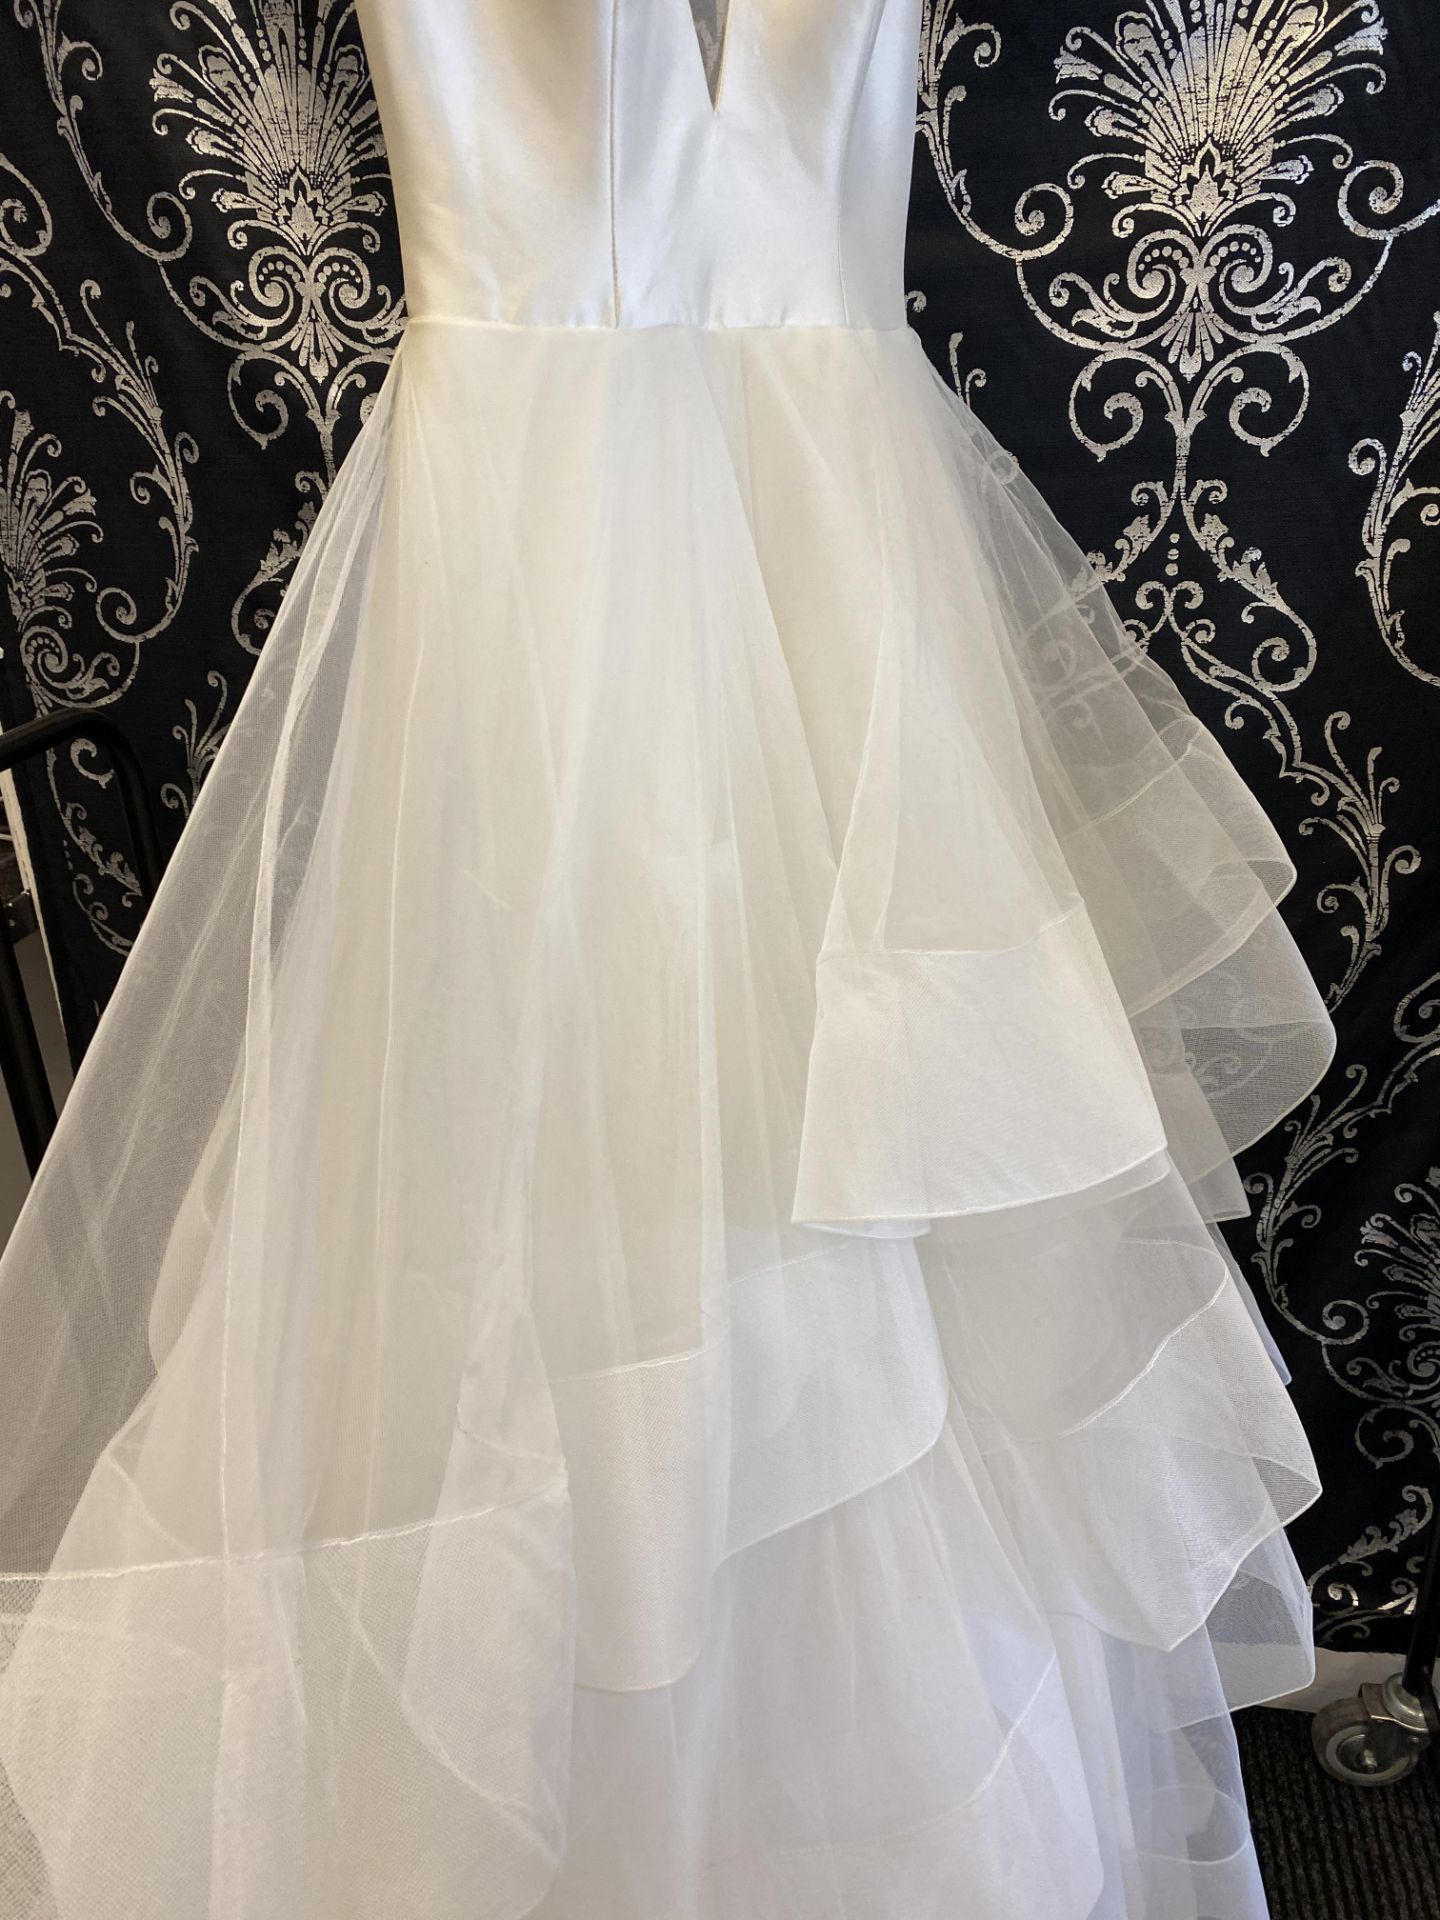 1 x ALLURE '9705' Stunning Chiffon Sculpted Skirted Designer Wedding Dress RRP £2,100 UK12 - Image 2 of 9